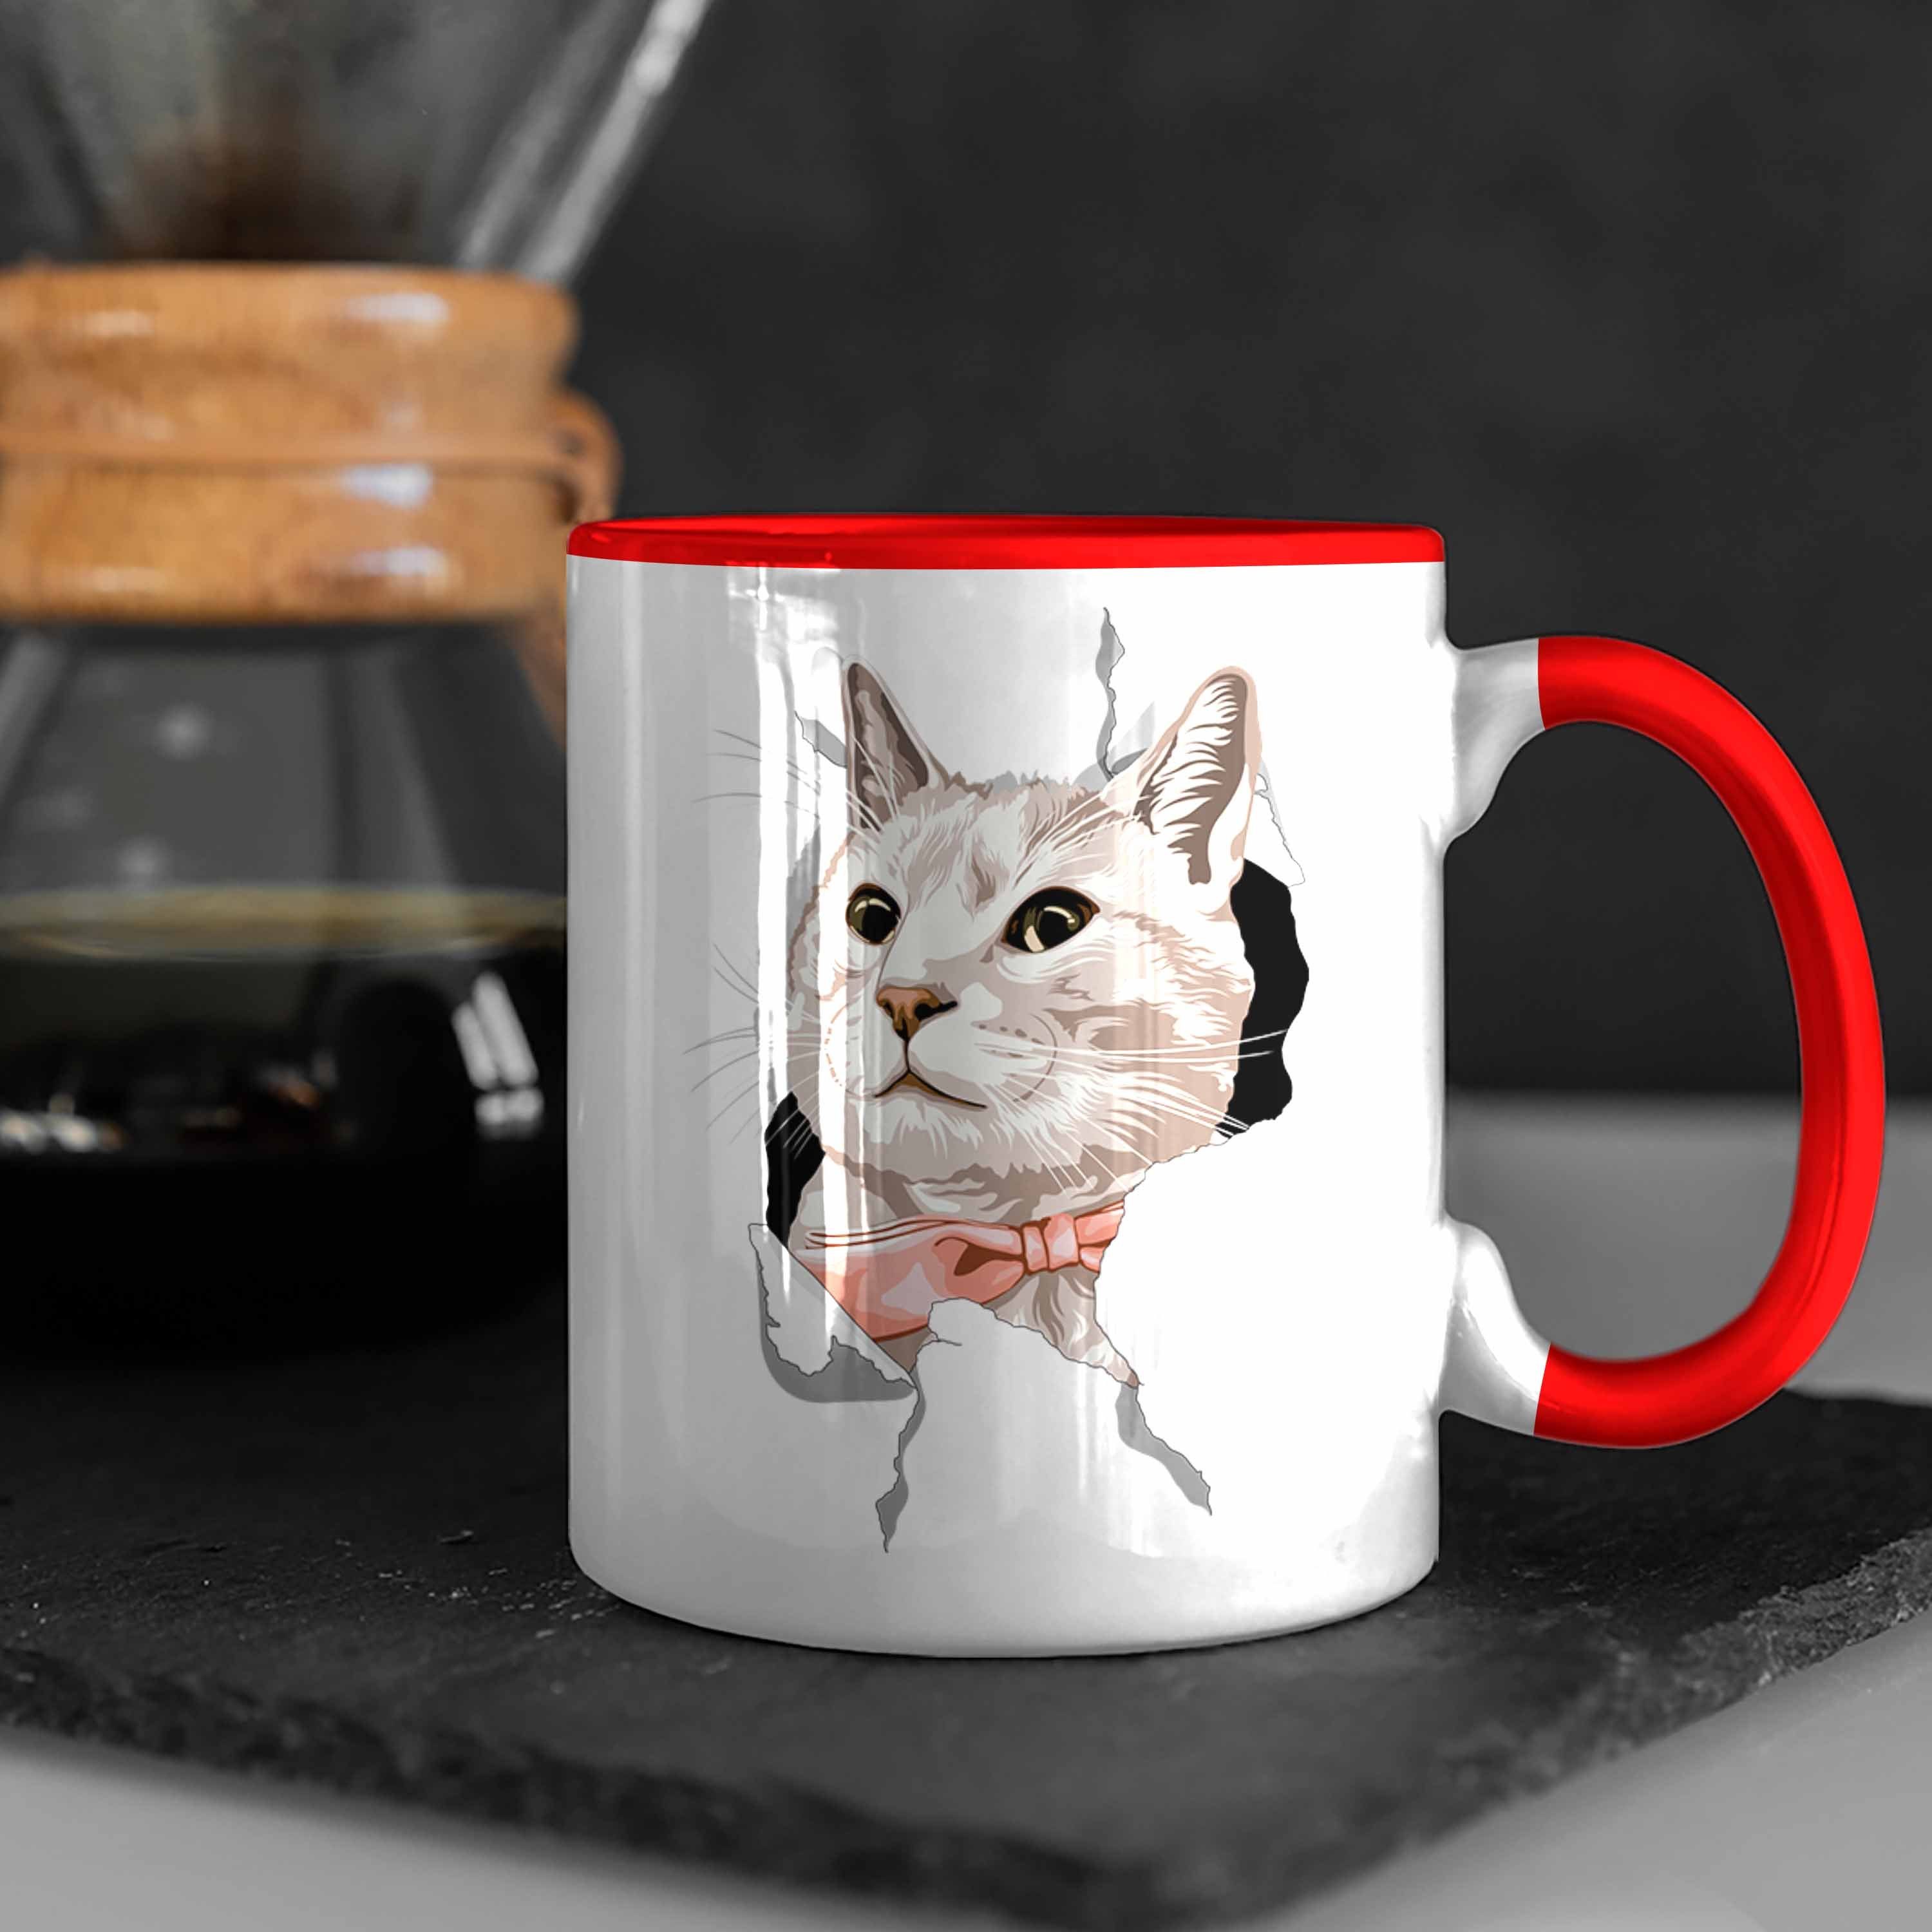 Geschenk - Katzen Rot Geschenkidee 3D Tasse Katzenbesitzerin Trendation Trendation Tasse Lustige Katzengrafik